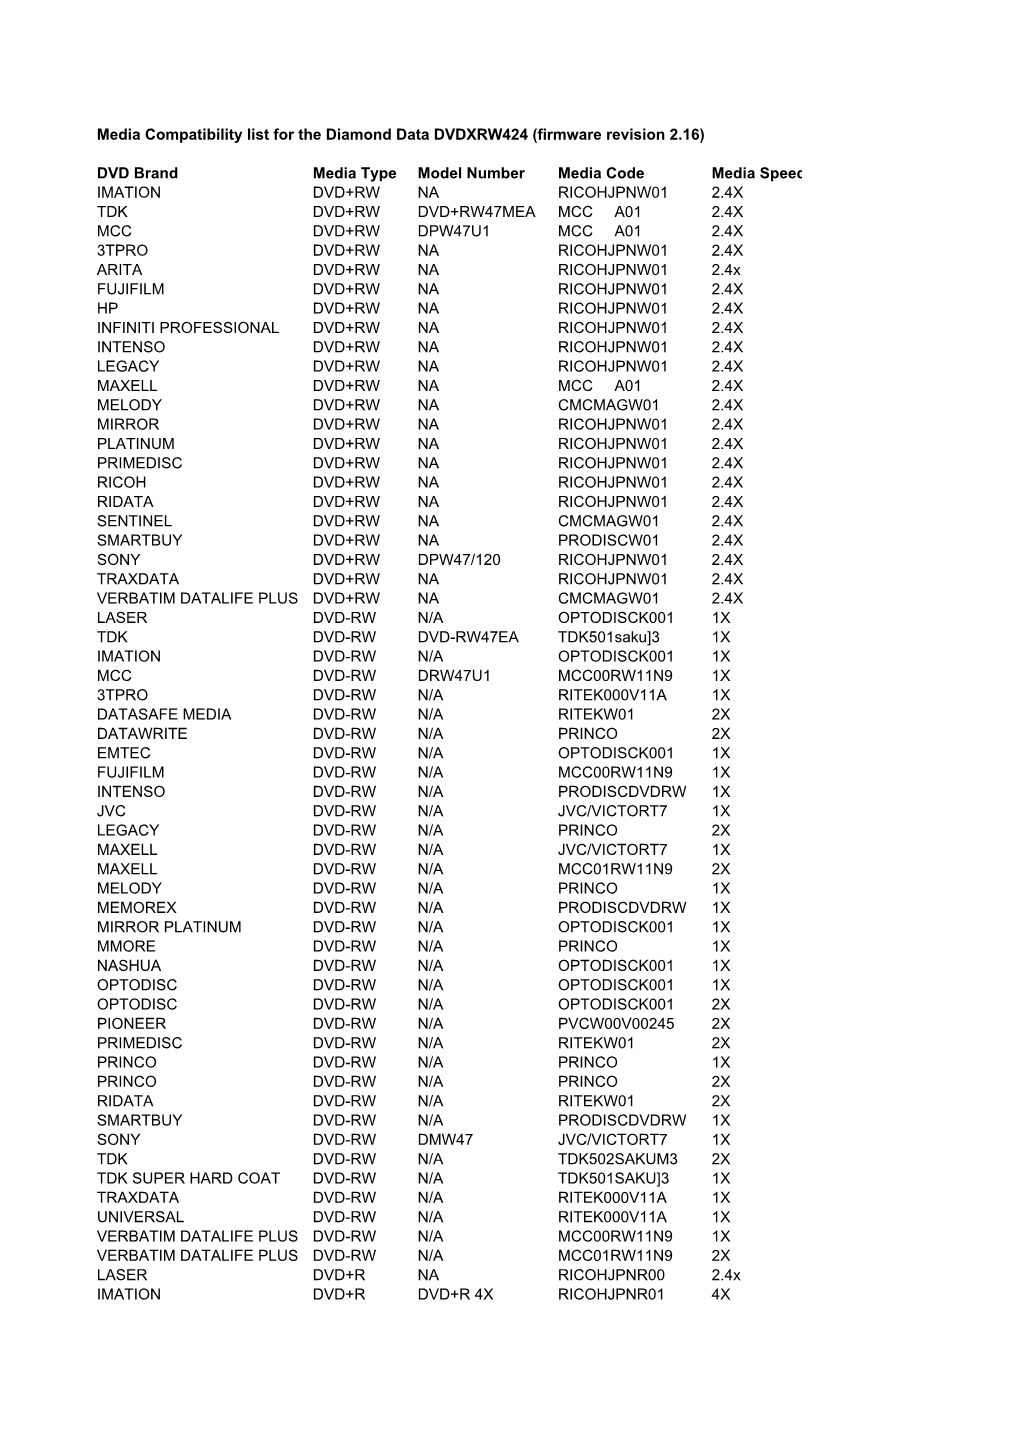 Media Compatibility List for DVDXRW424